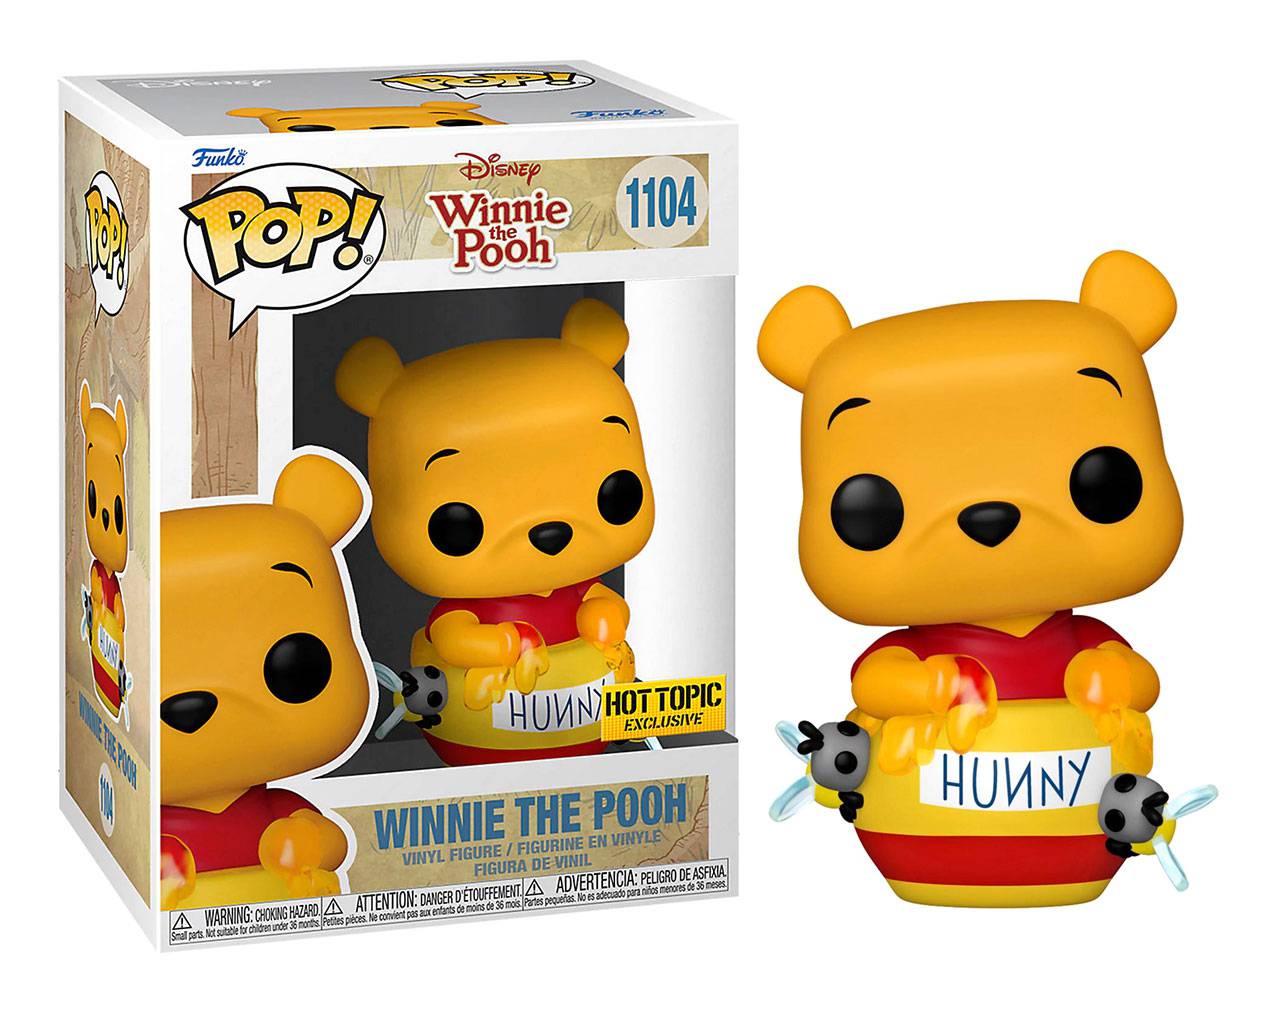 Winnie The Pooh (Hunny) Pop! Vinyl